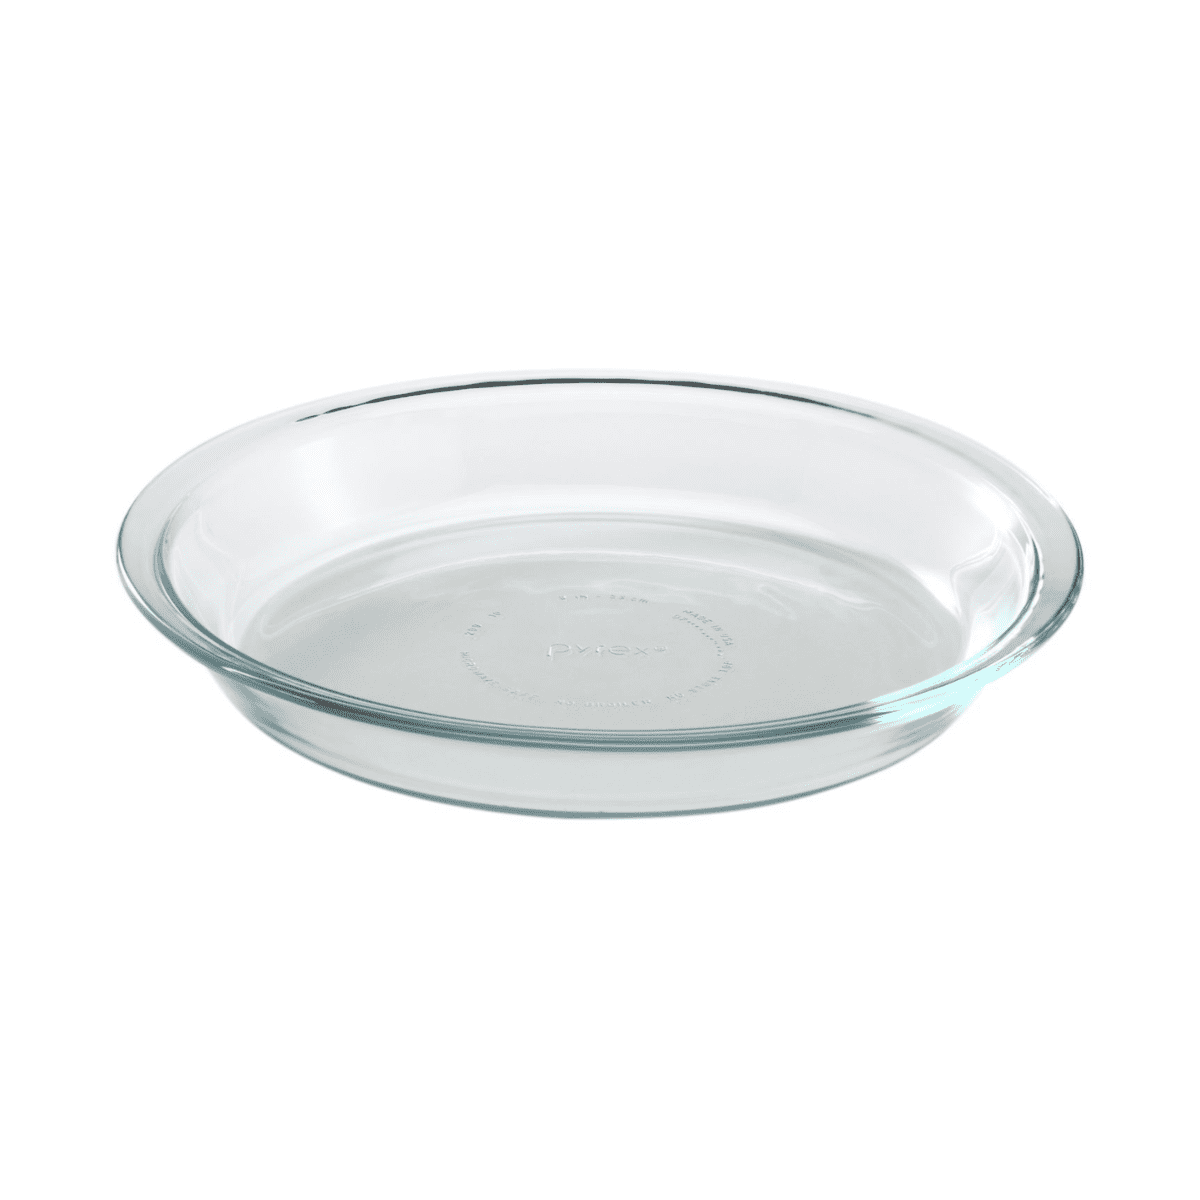 Glass 9-inch Pie Dish